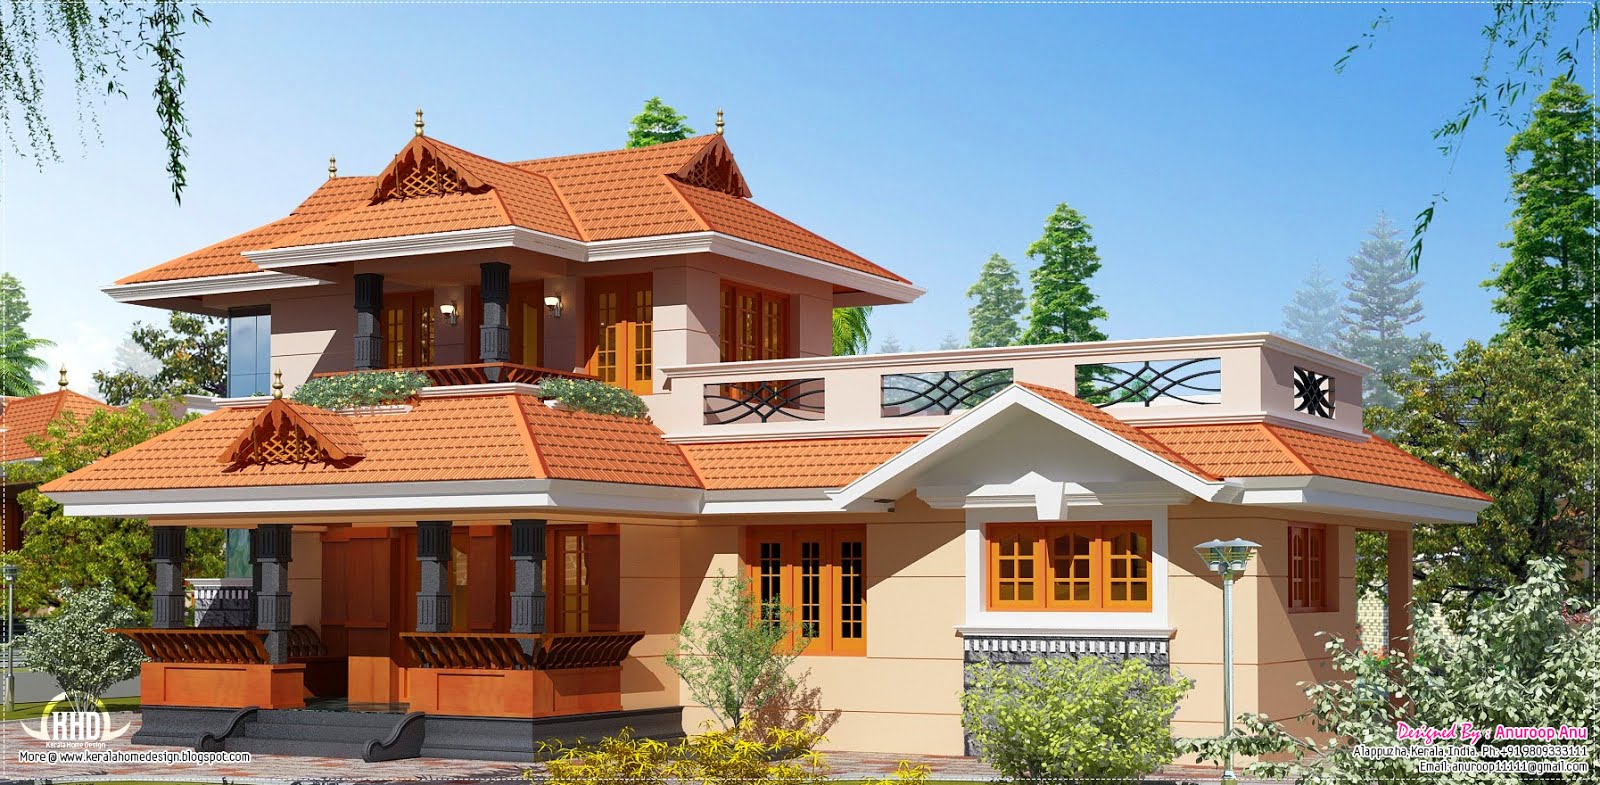 1950 square feet Kerala  model  home  House  Design  Plans 